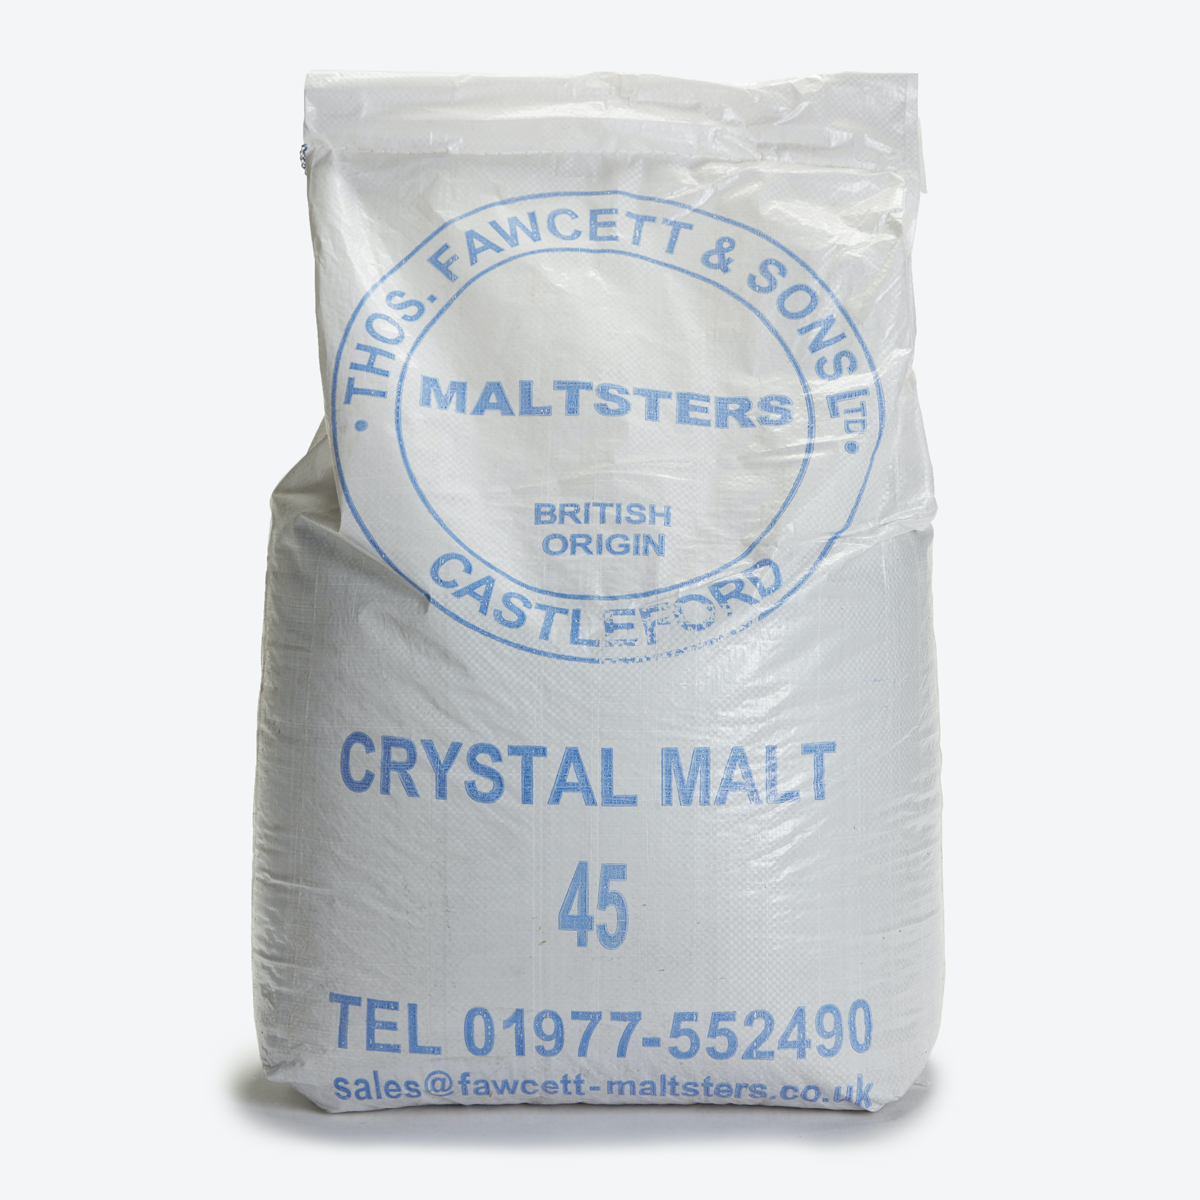 TF&S Crystal Malt I